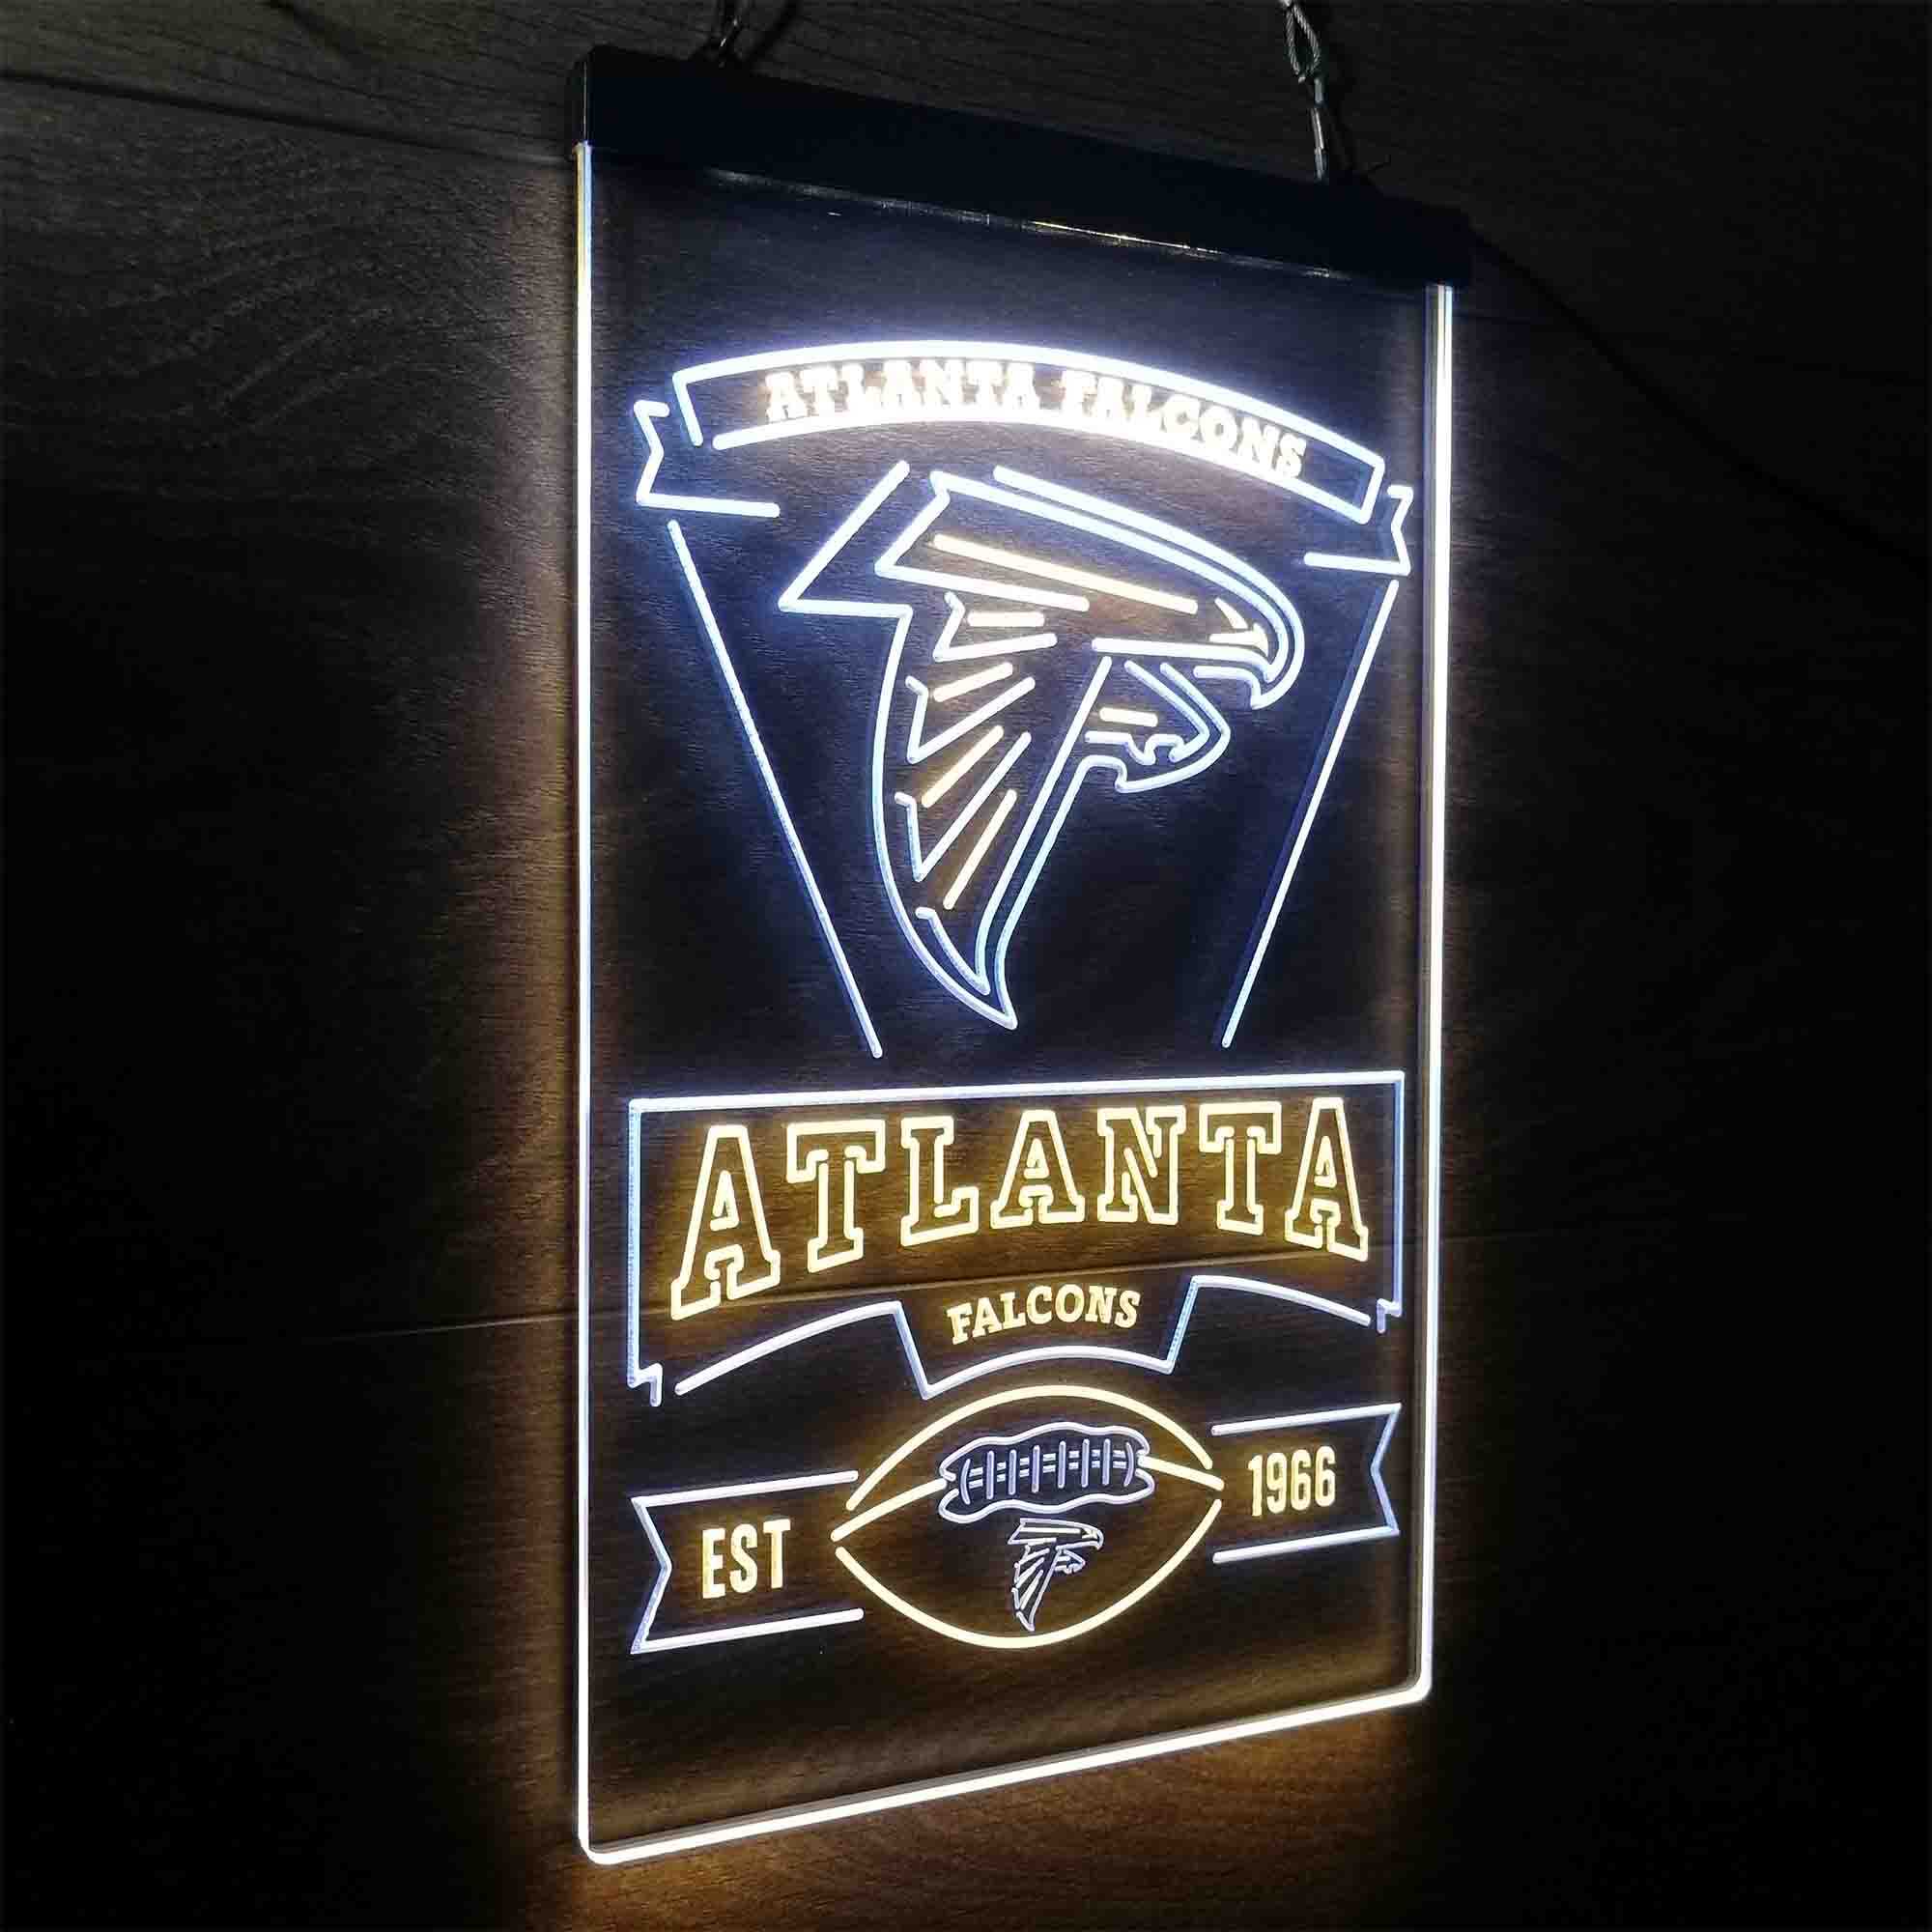 Atlanta Falcons Est. 1966 LED Neon Sign